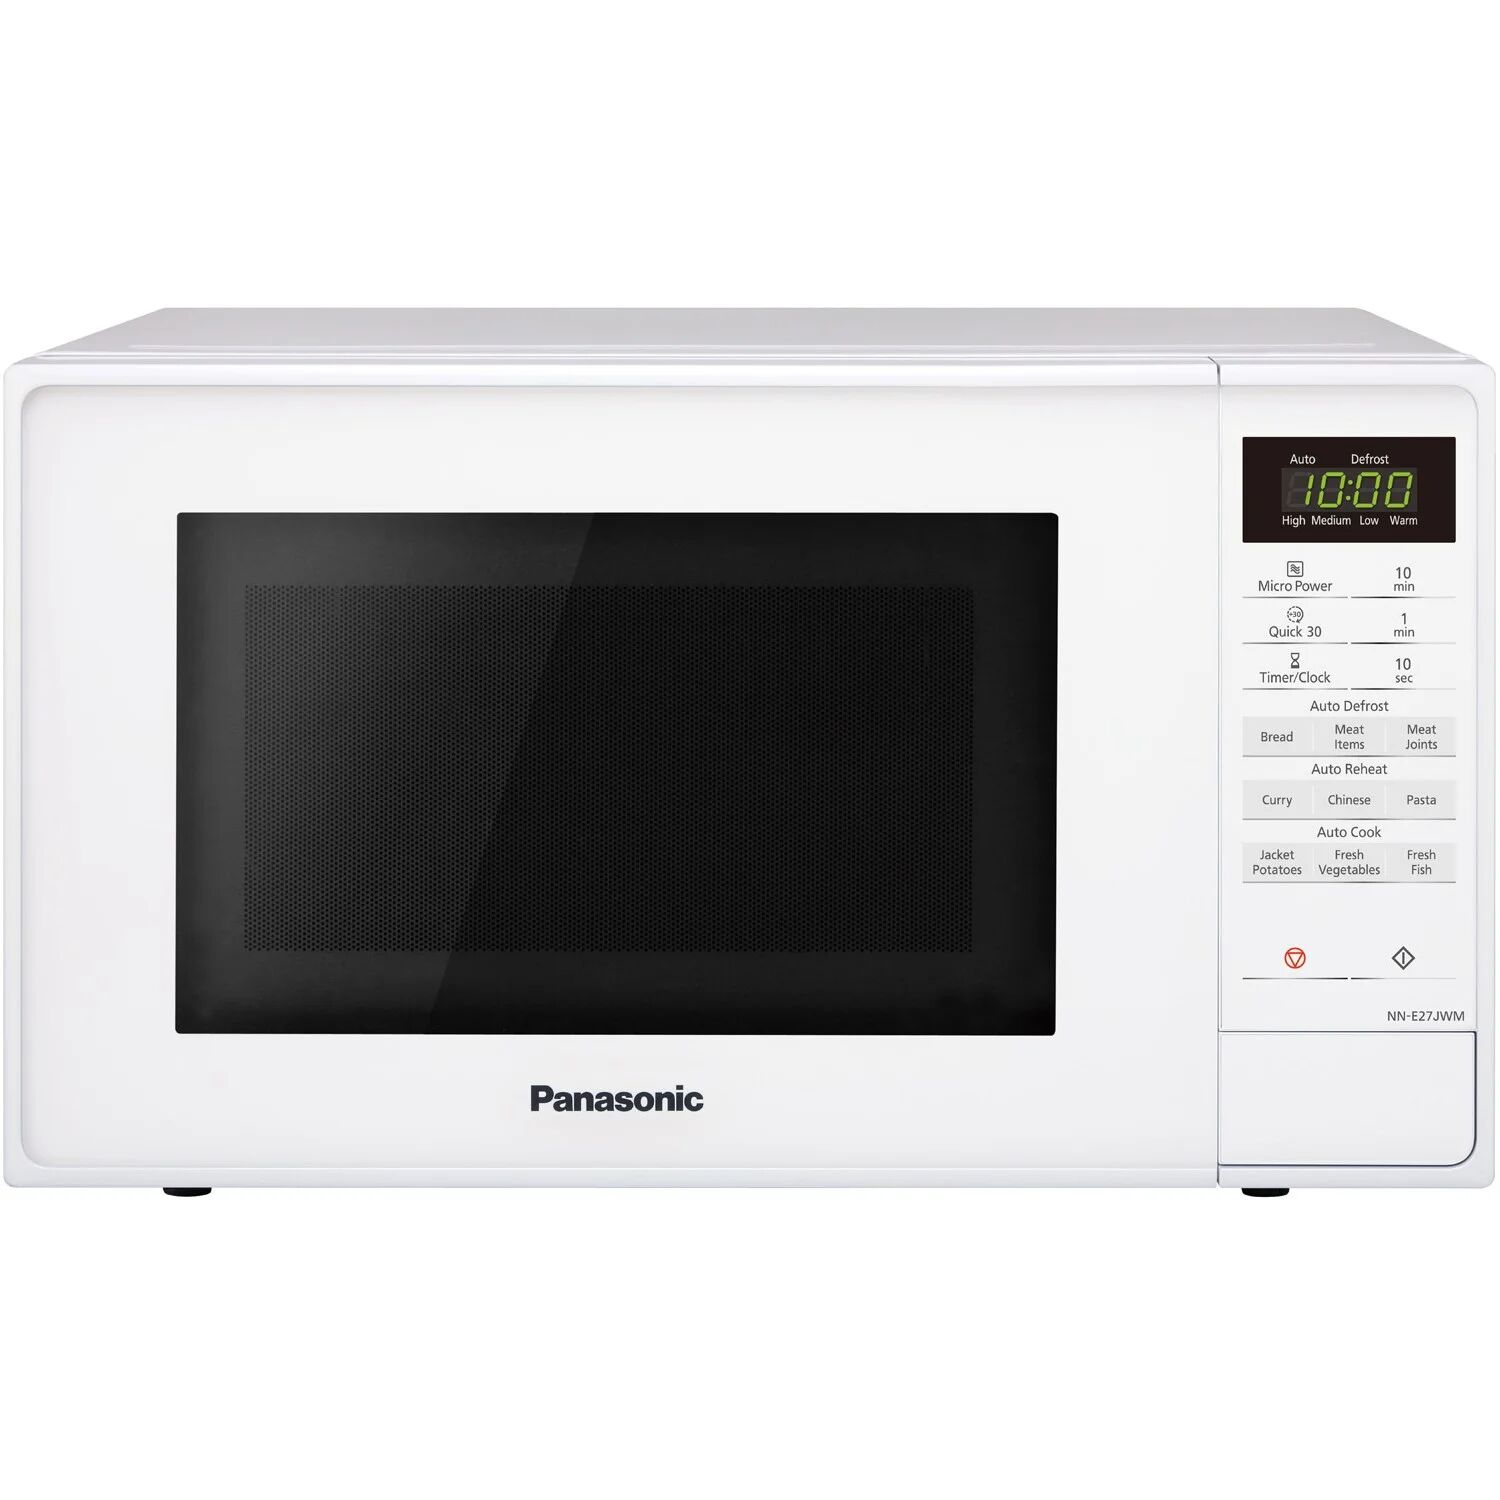 Panasonic 20L Digital Microwave Oven - White